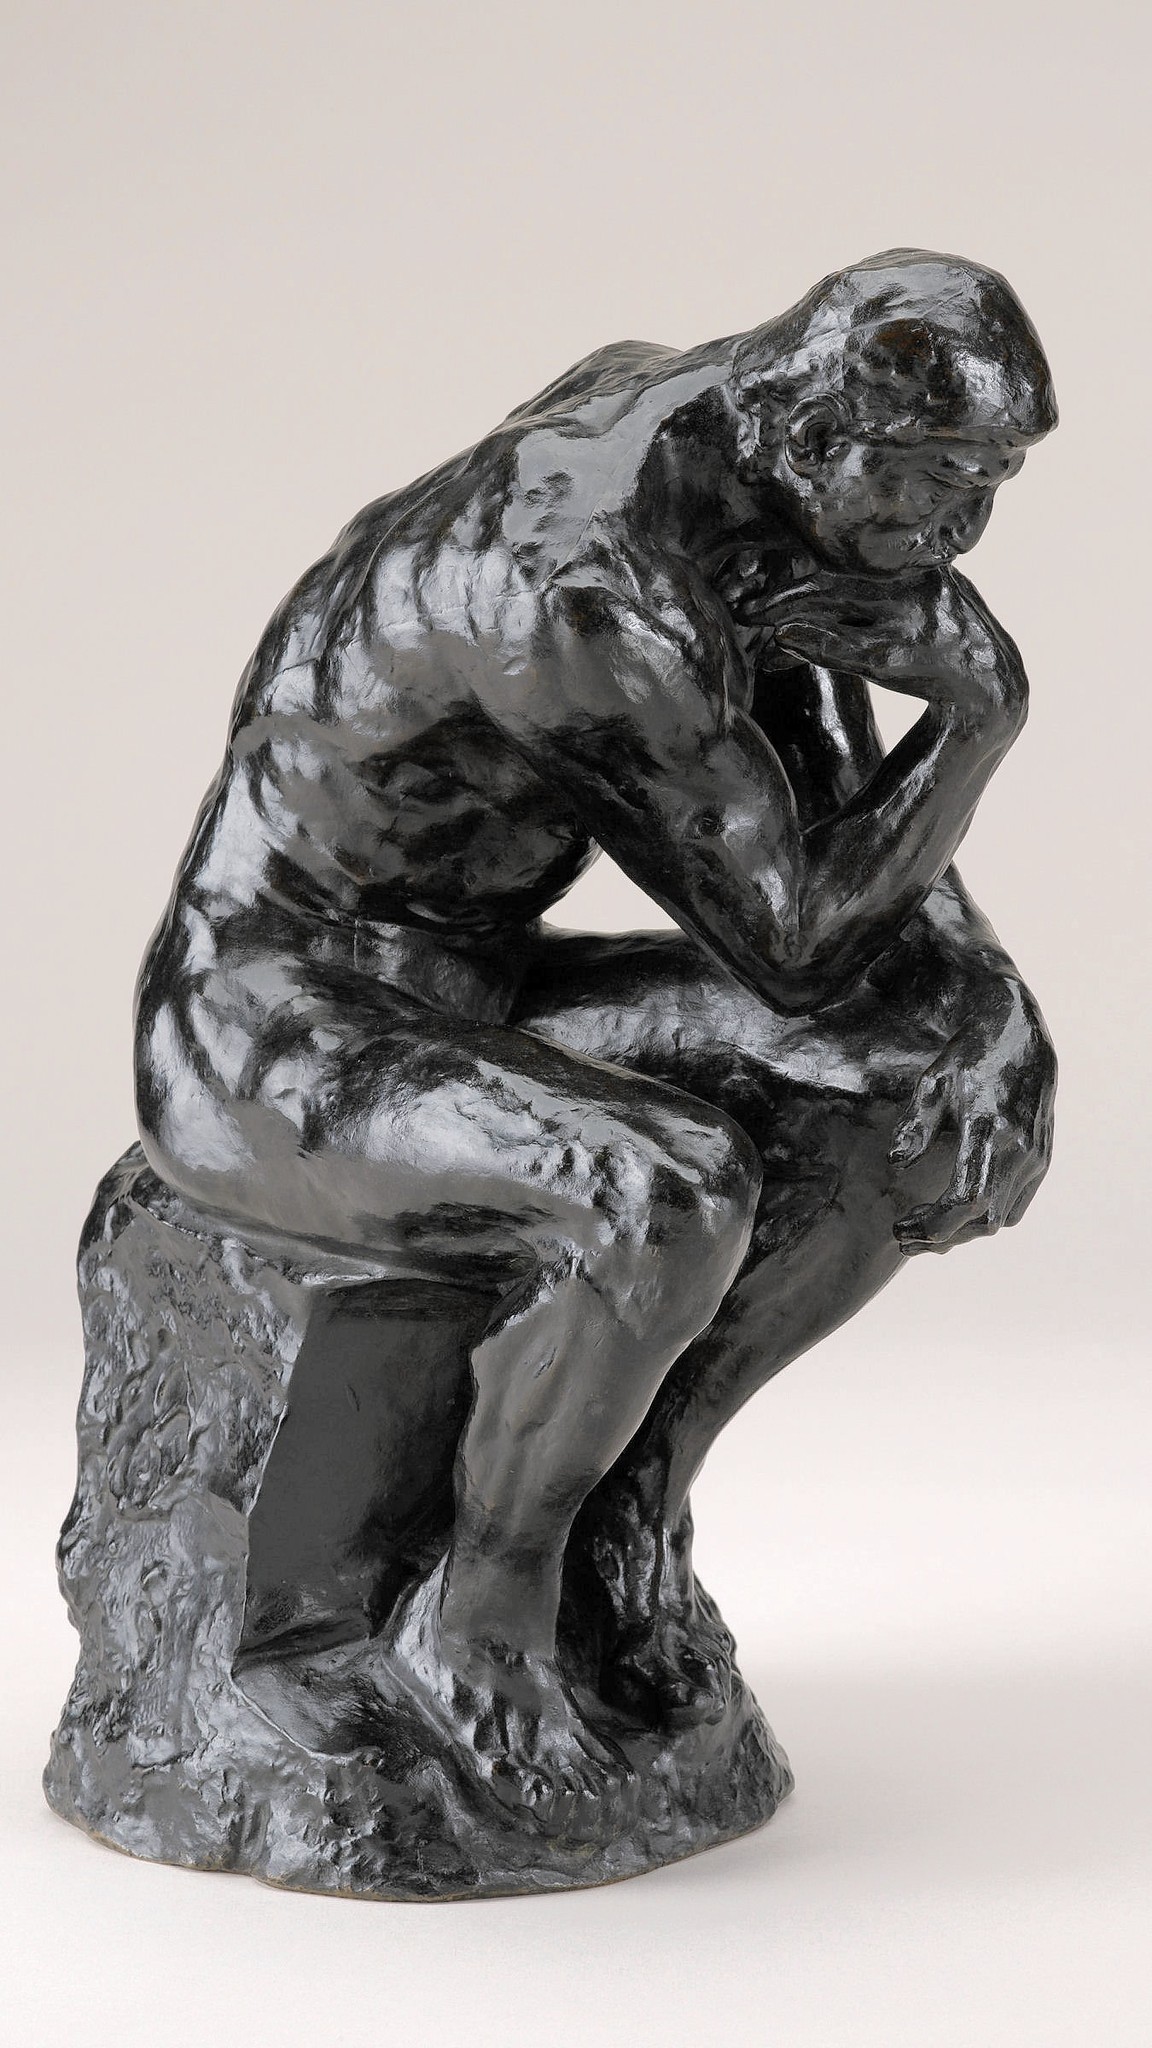 Michener Museum shows exhibit of bronze sculpture by Auguste Rodin